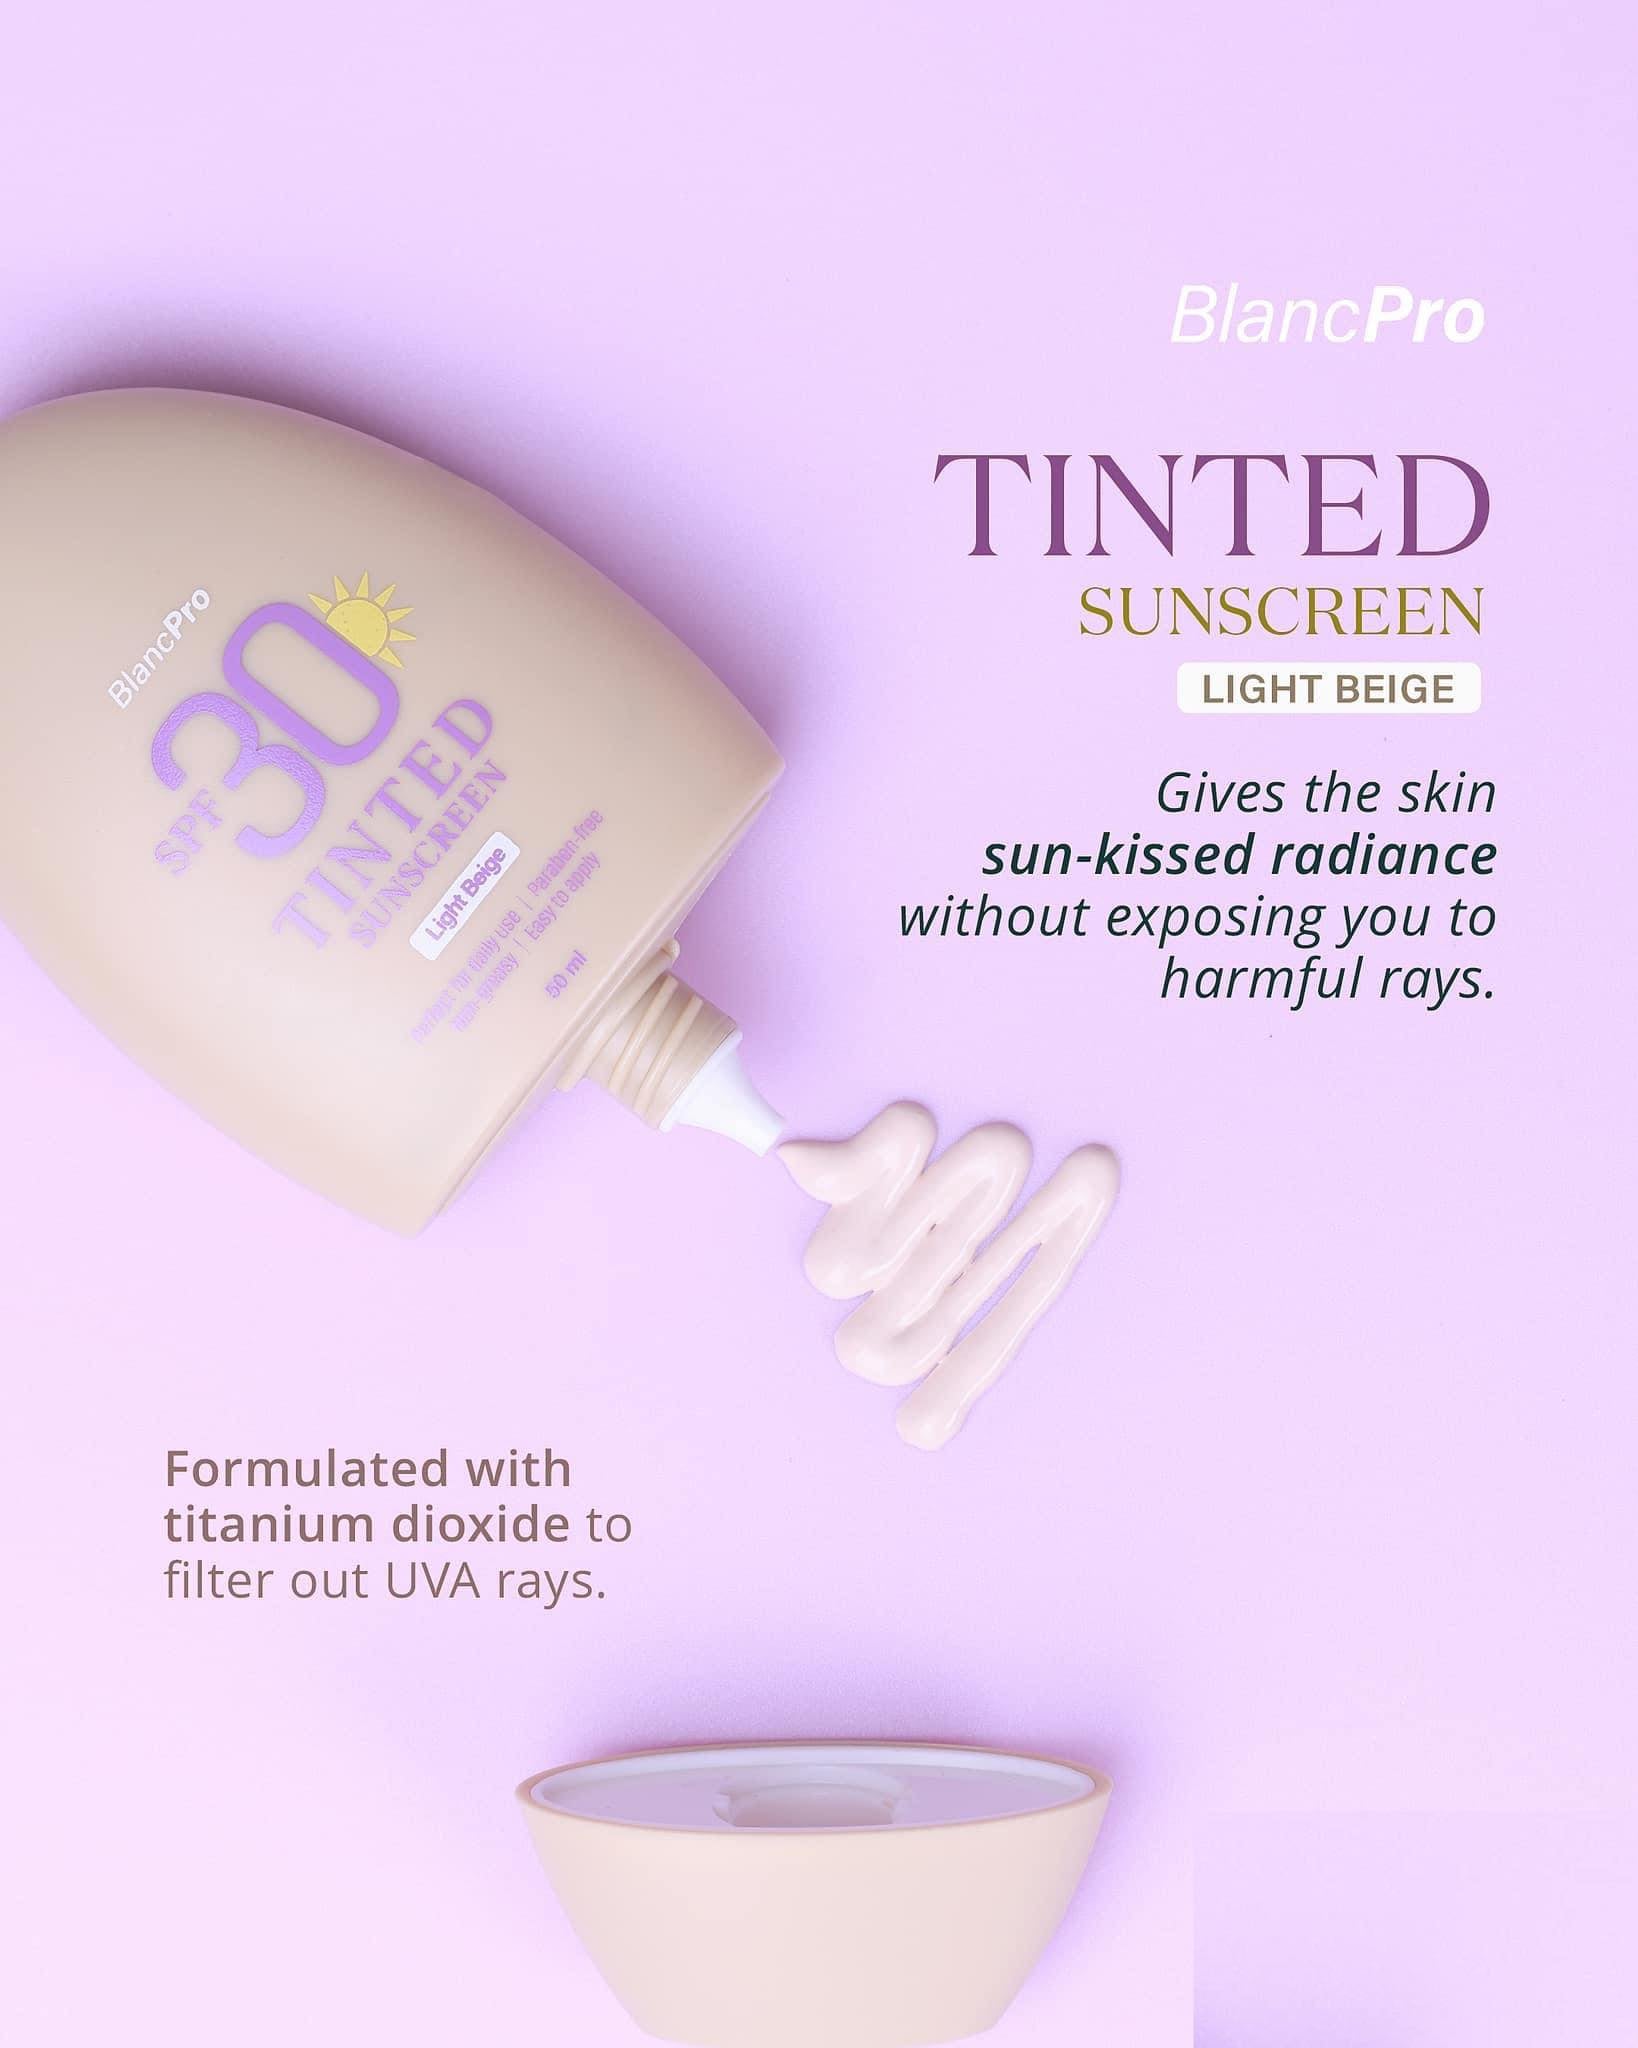 BlancPRO Tinted Sunscreen SPF 30 - Light Beige